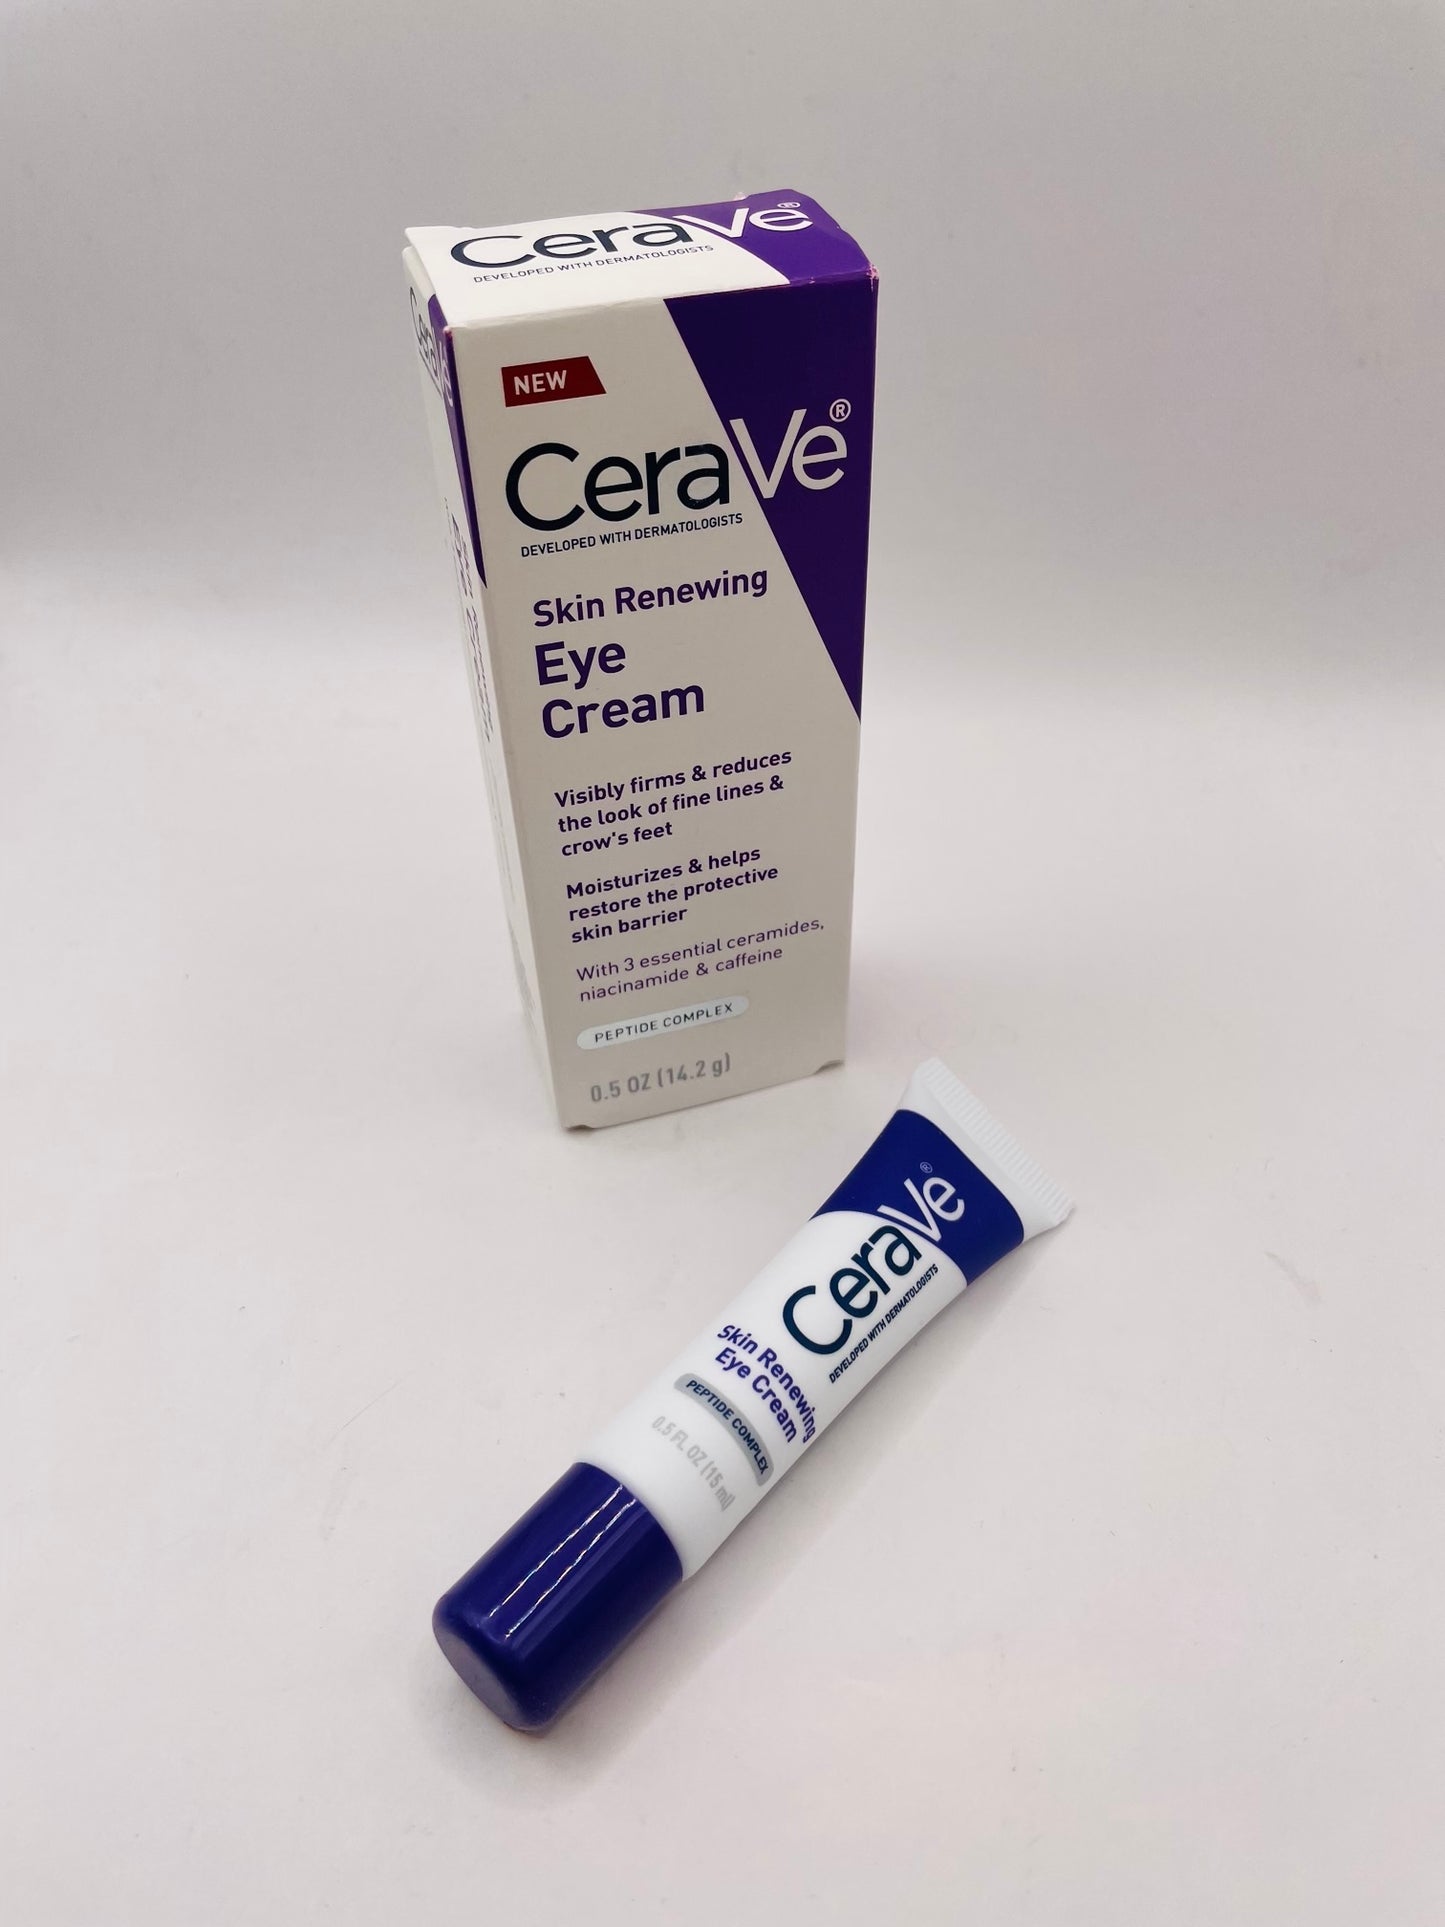 Cerave eye cream